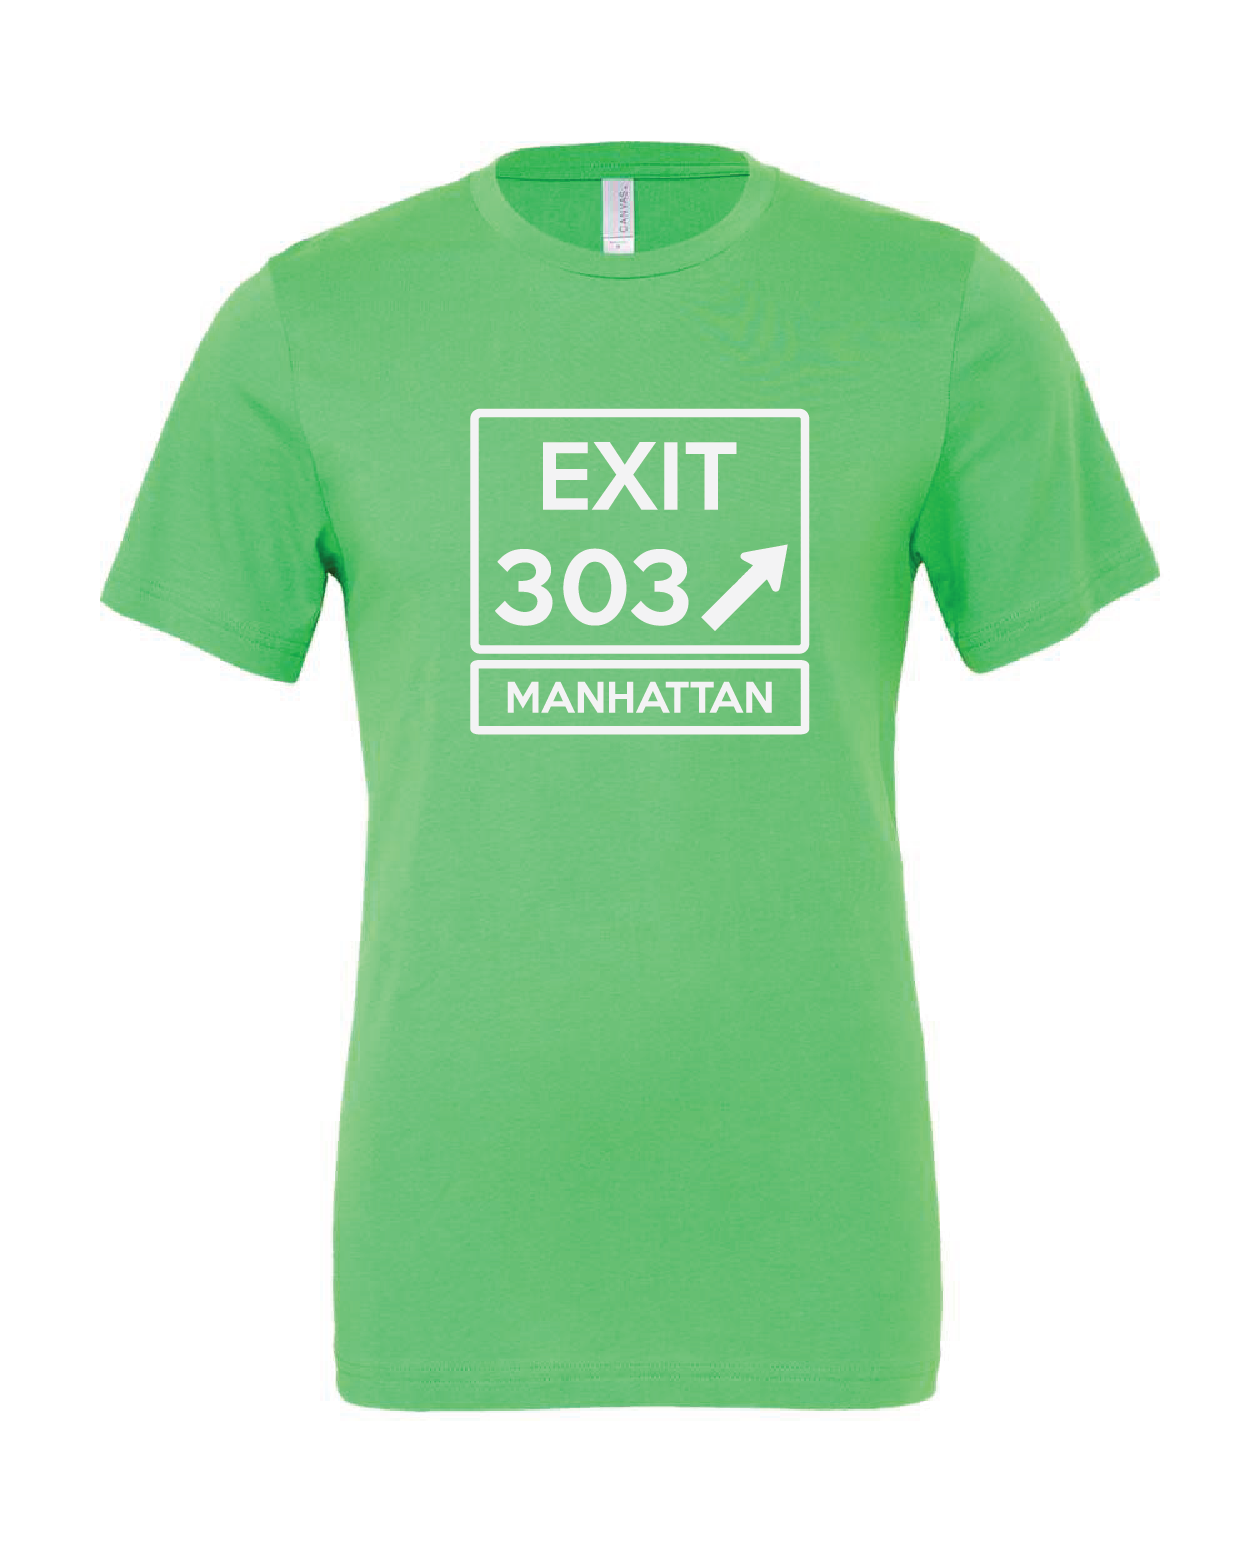 Exit 303